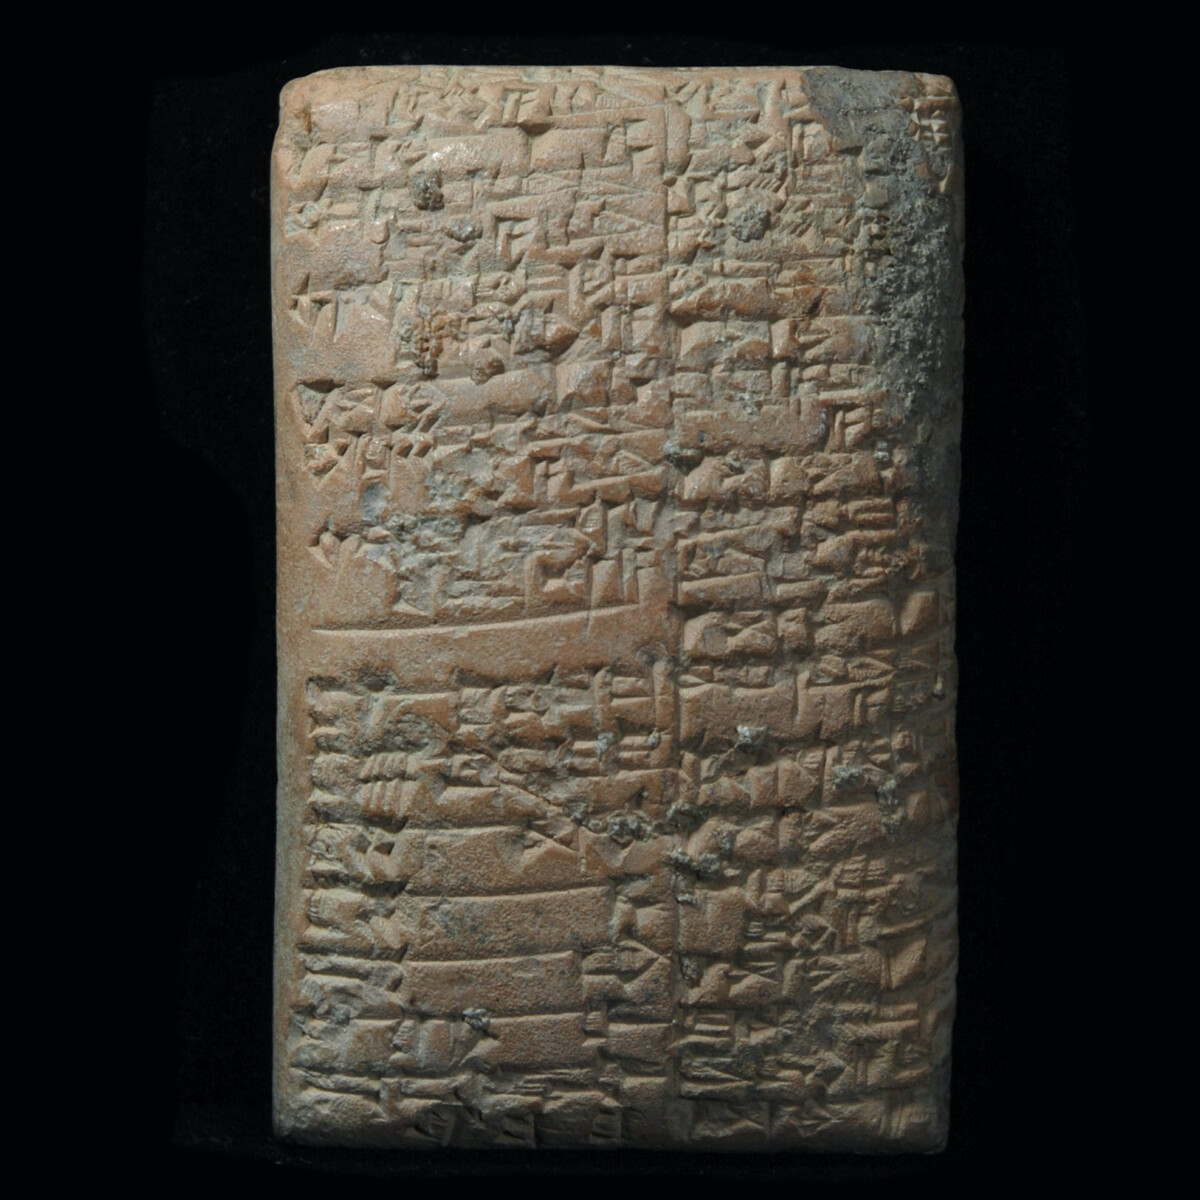 Large cuneiform tablet with messenger text